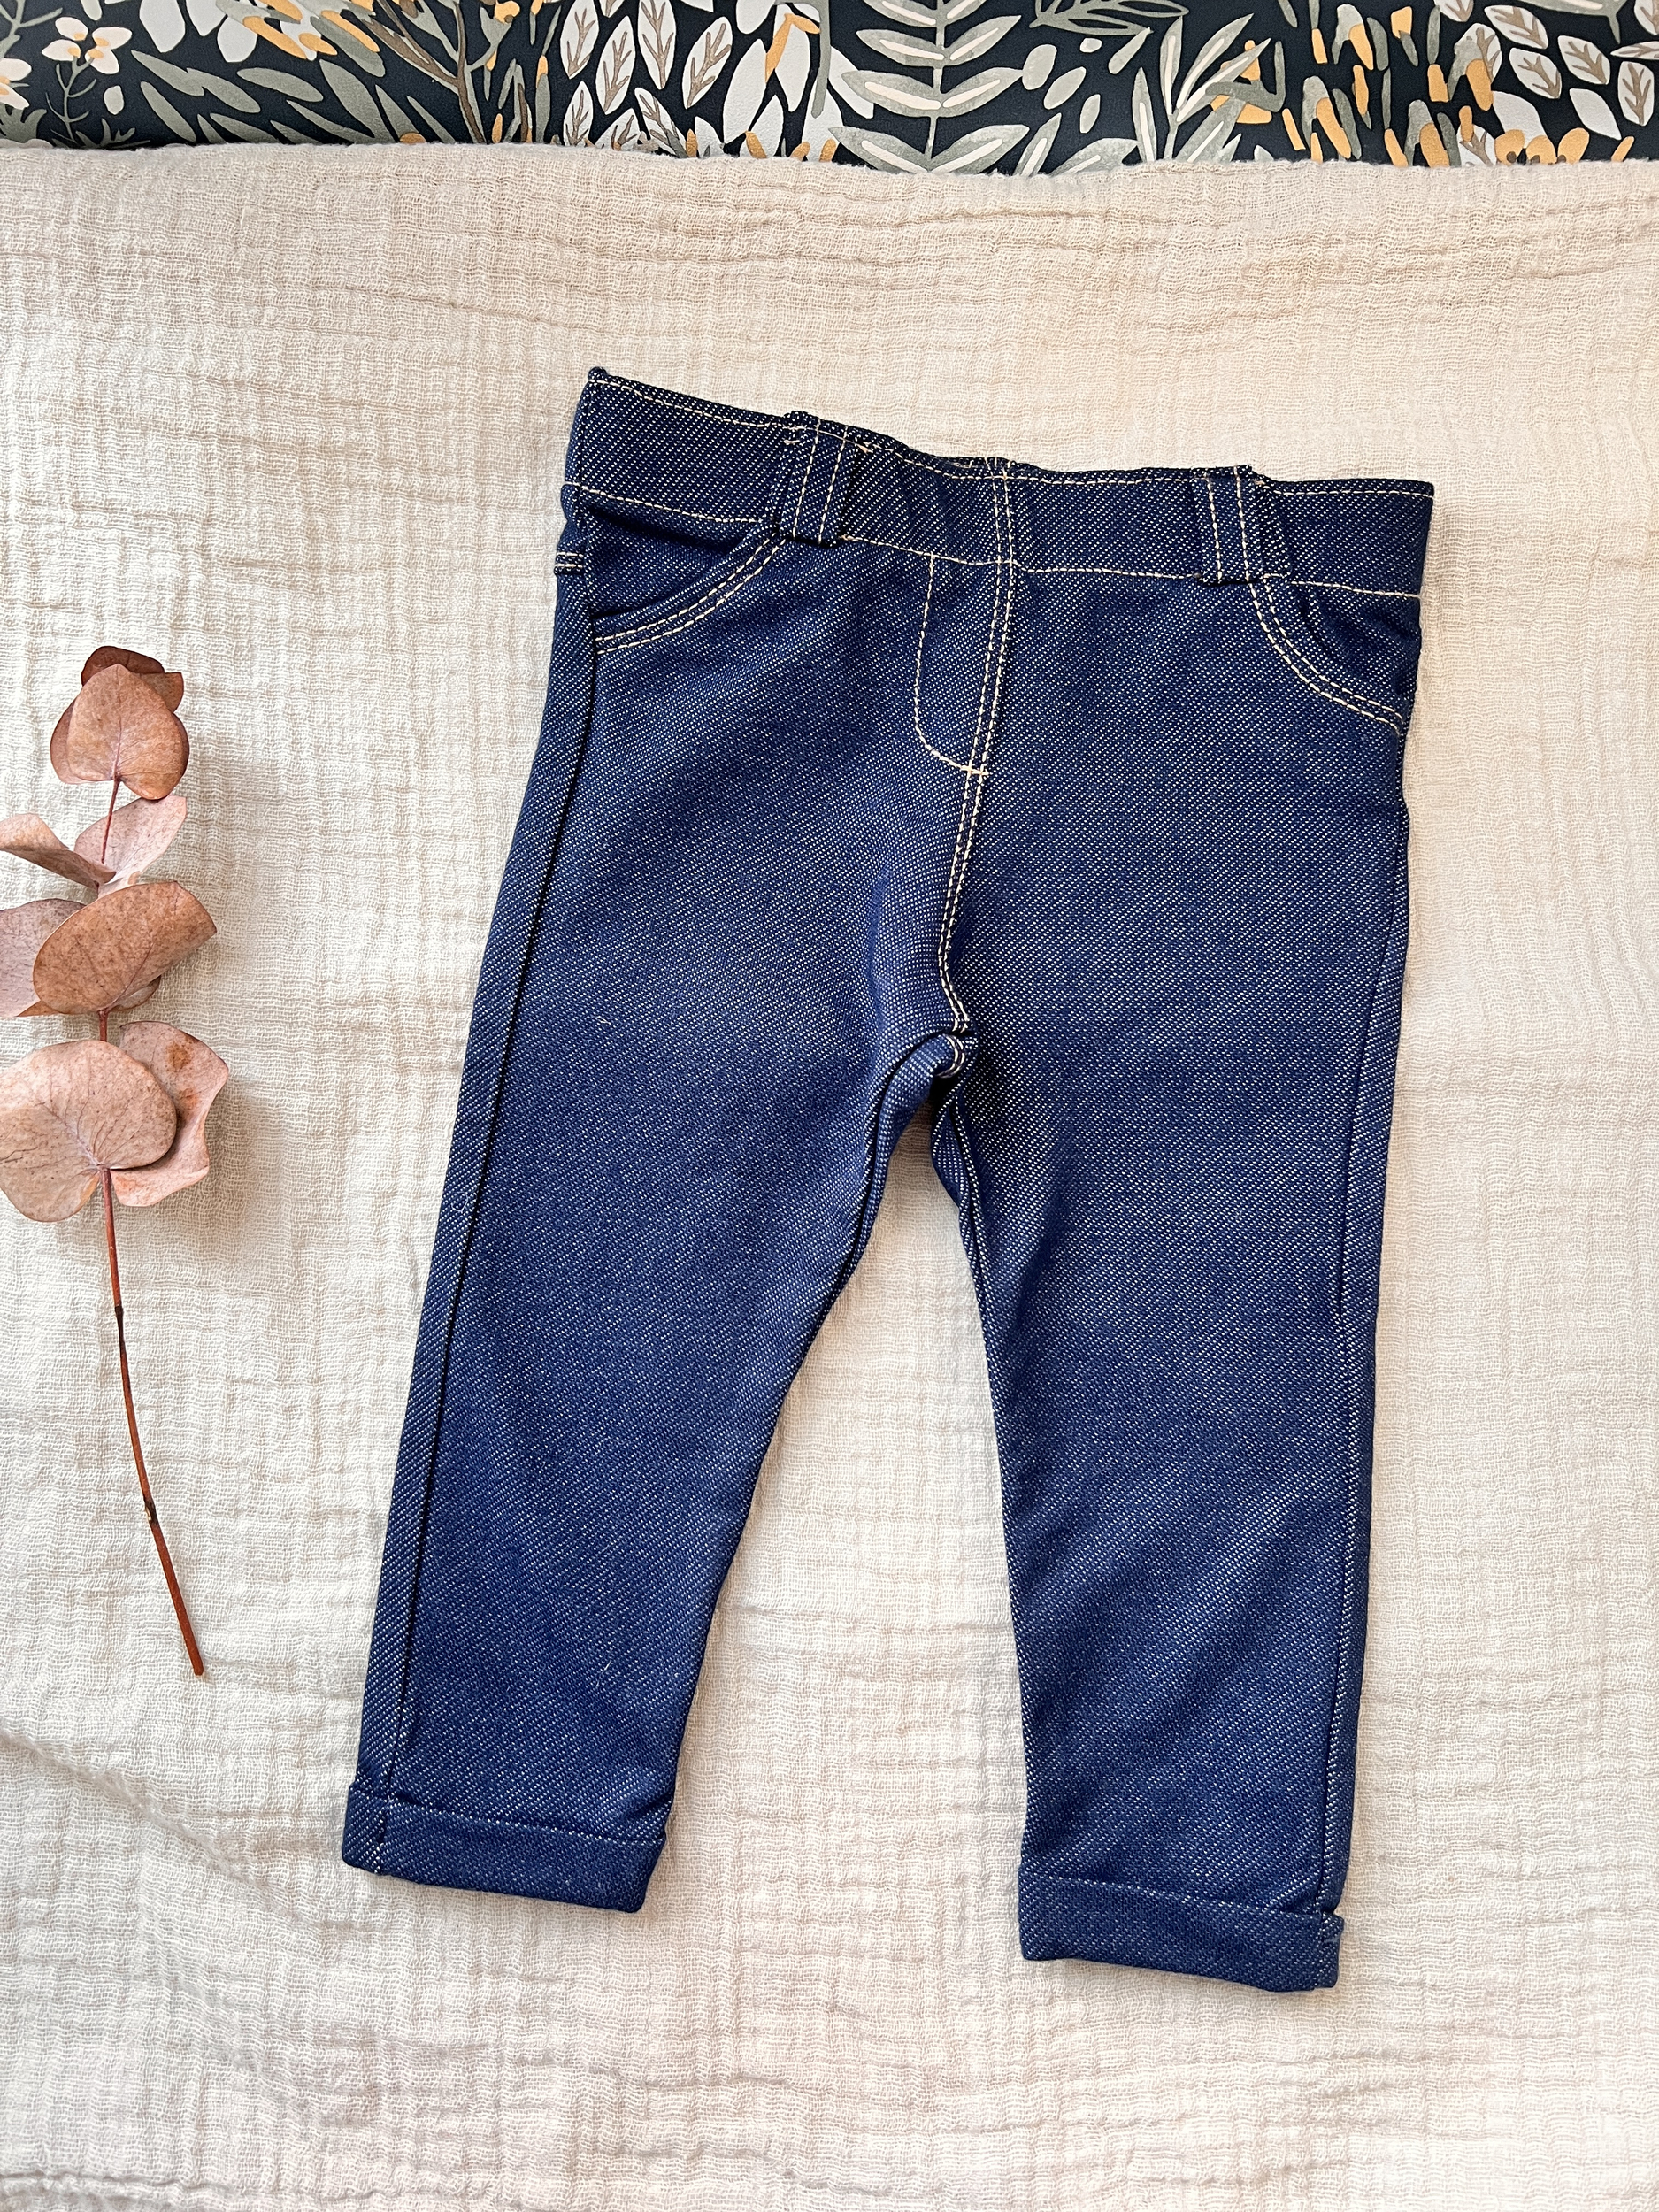 Pantalon tregging bleu bébé MIXTE NEUF - Kiabi - 6 mois